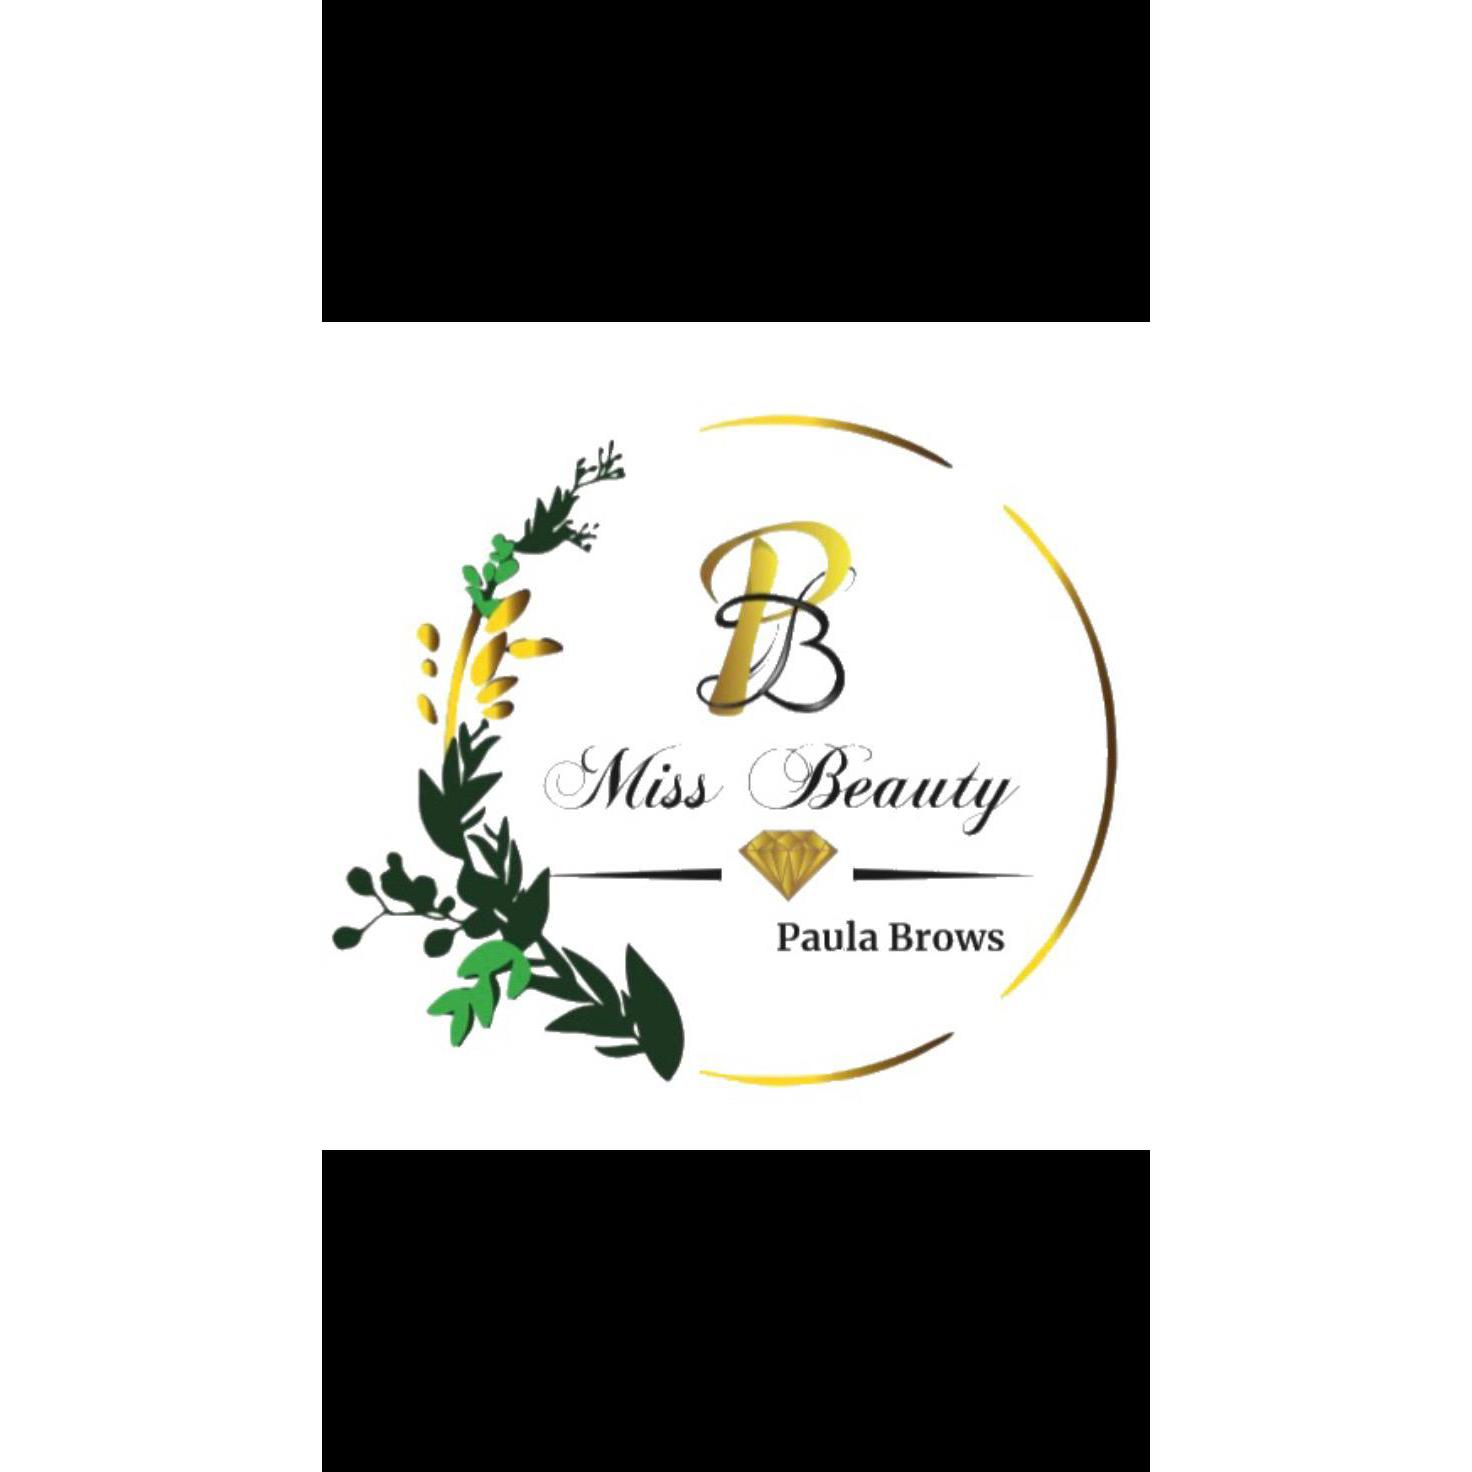 Microblading Bilbao - Miss beauty -Paula Brows Logo